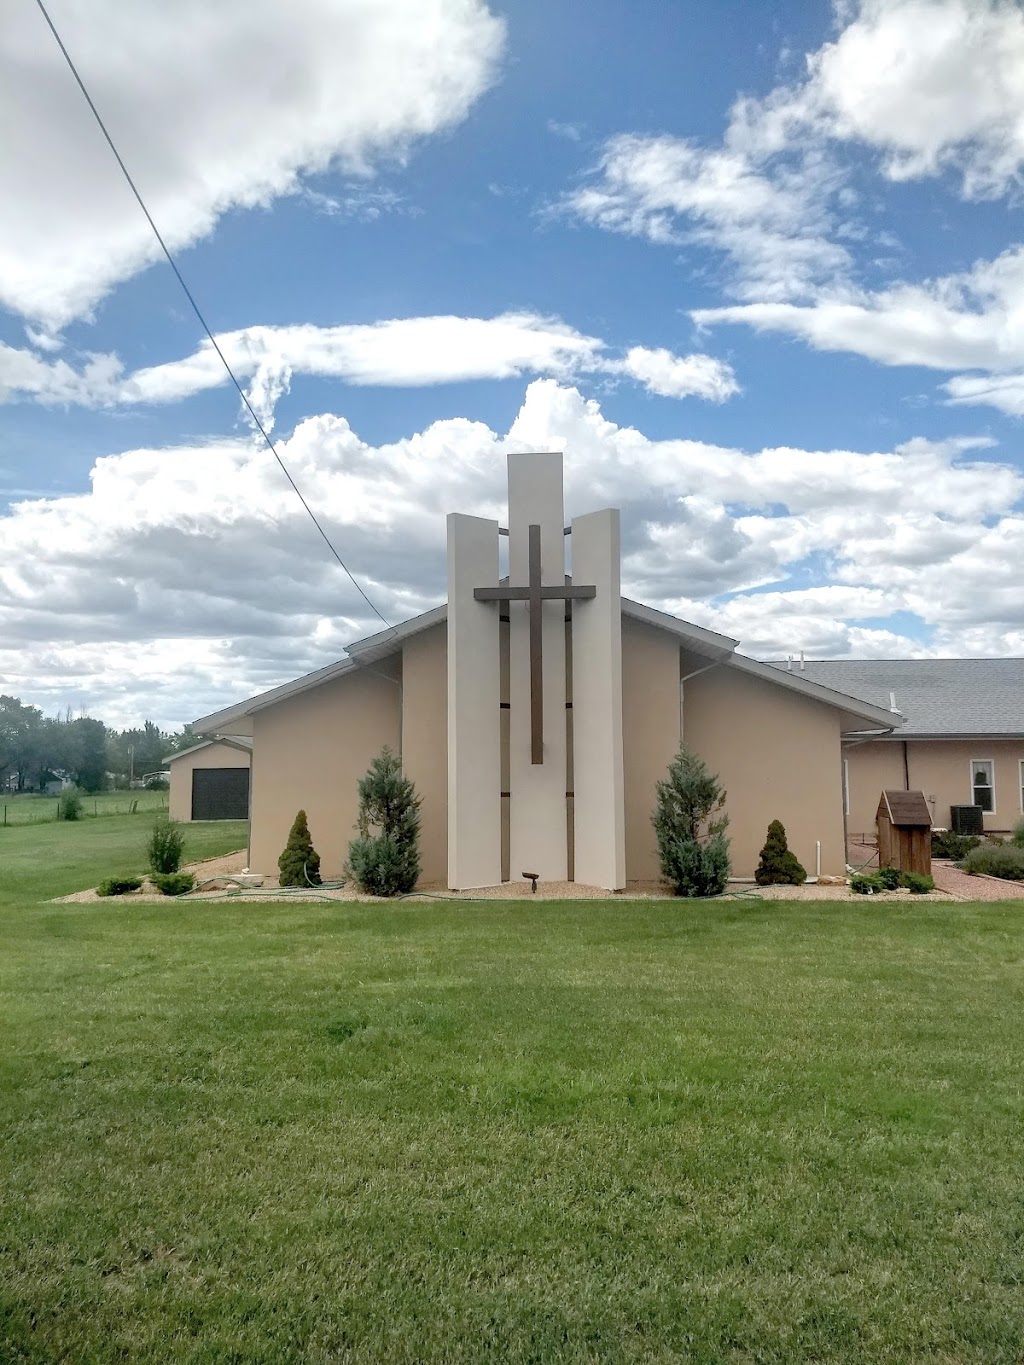 St. John Lutheran Church | 790 Greydene Ave, Cañon City, CO 81212, USA | Phone: (719) 275-0111